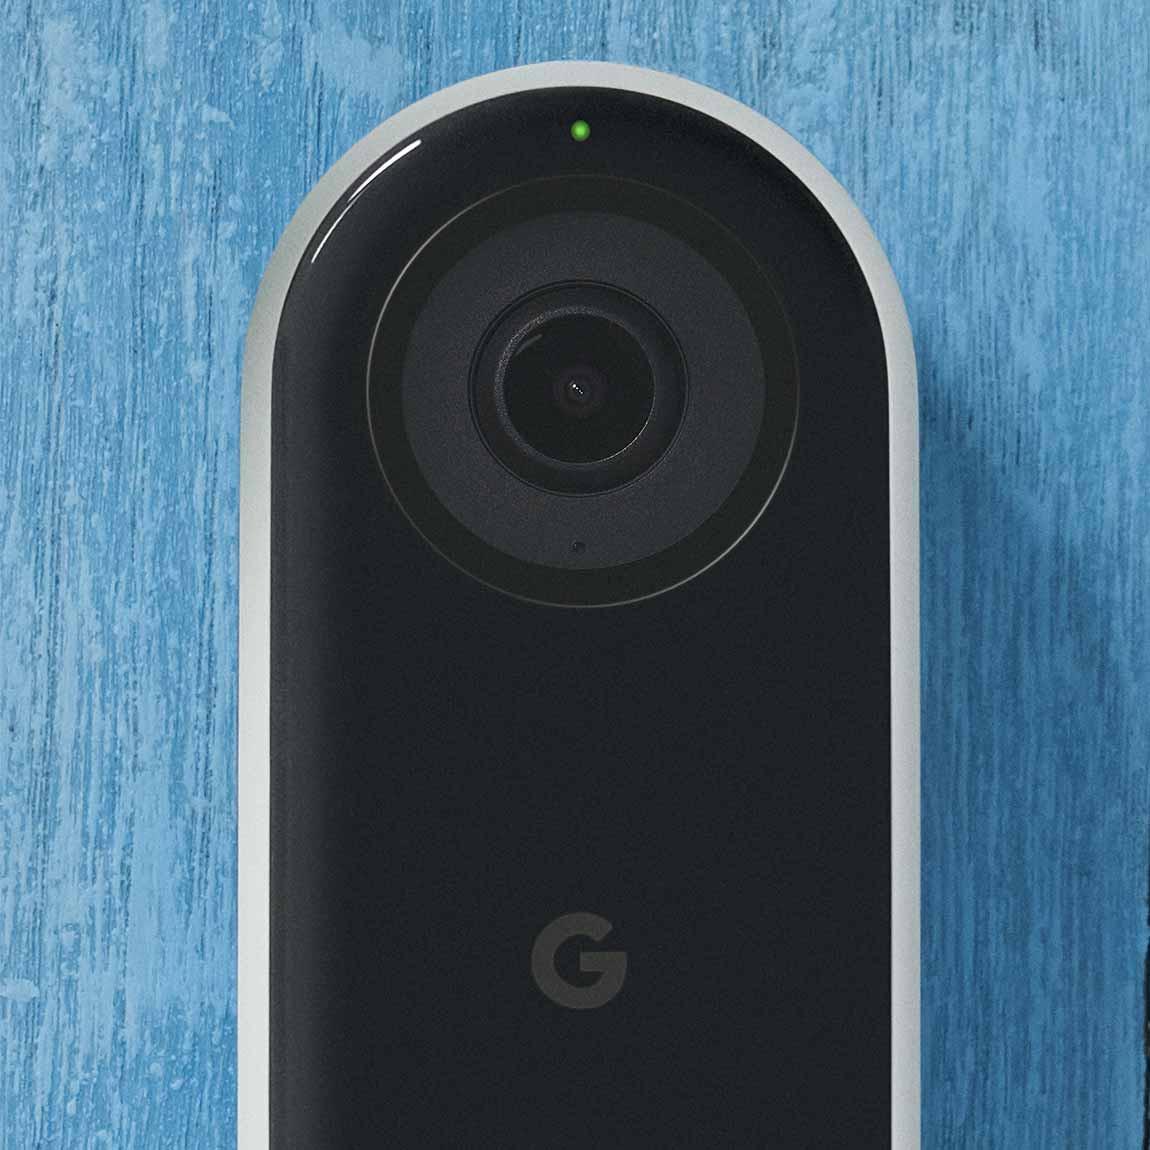 Google Nest Doorbell (Mit Kabel) - smarte Türklingel Nahaufnahme